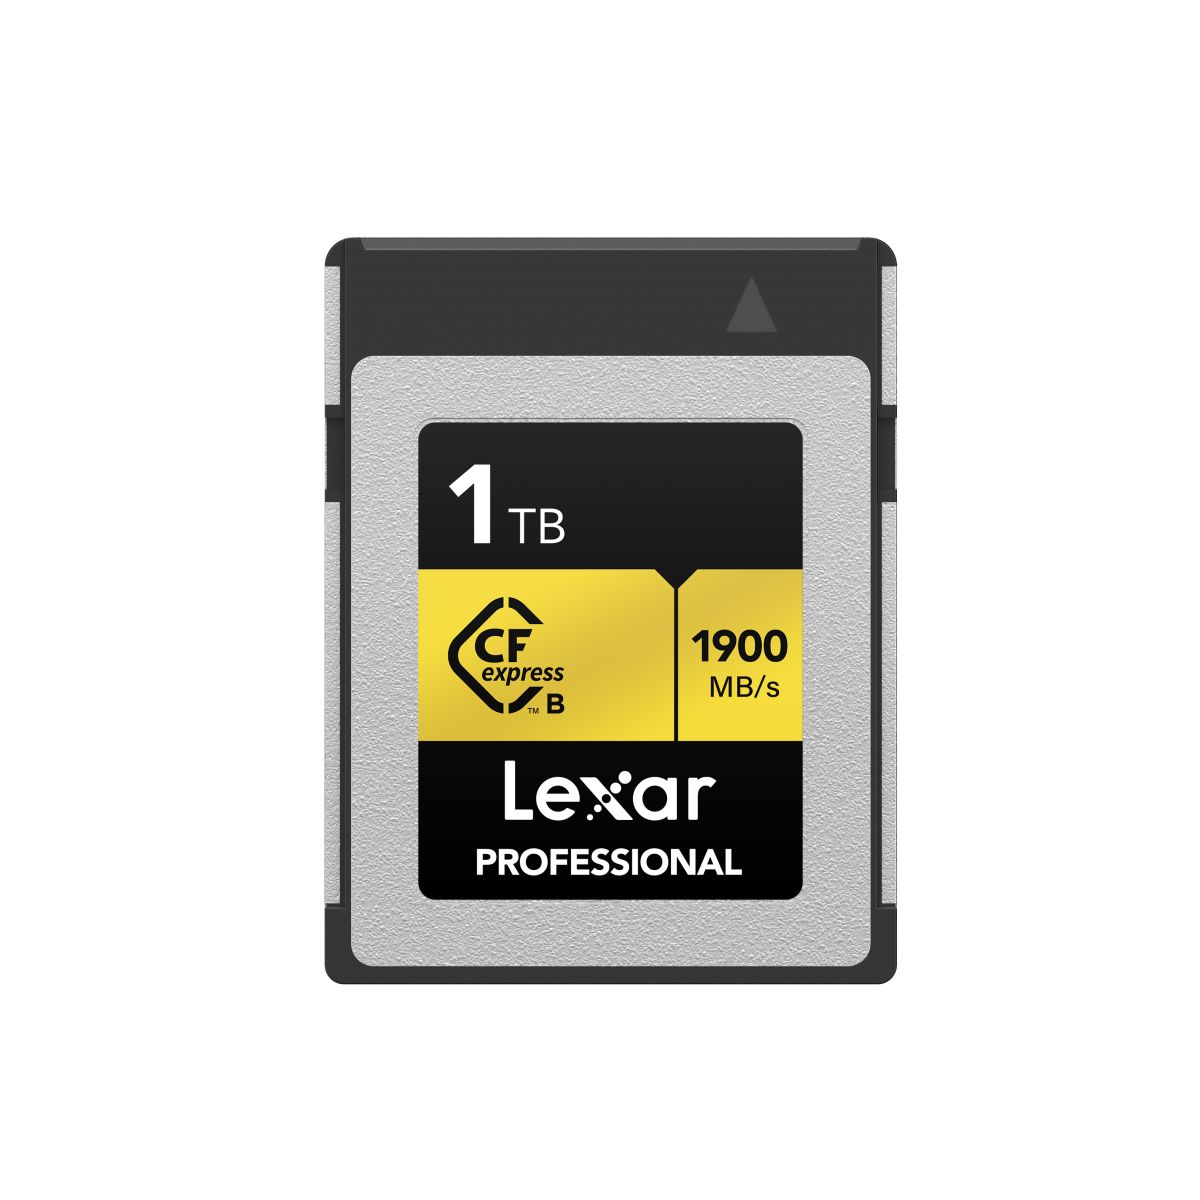 Lexar 1TB CFexpress PRO Gold Type B 1900/1500 MB/s